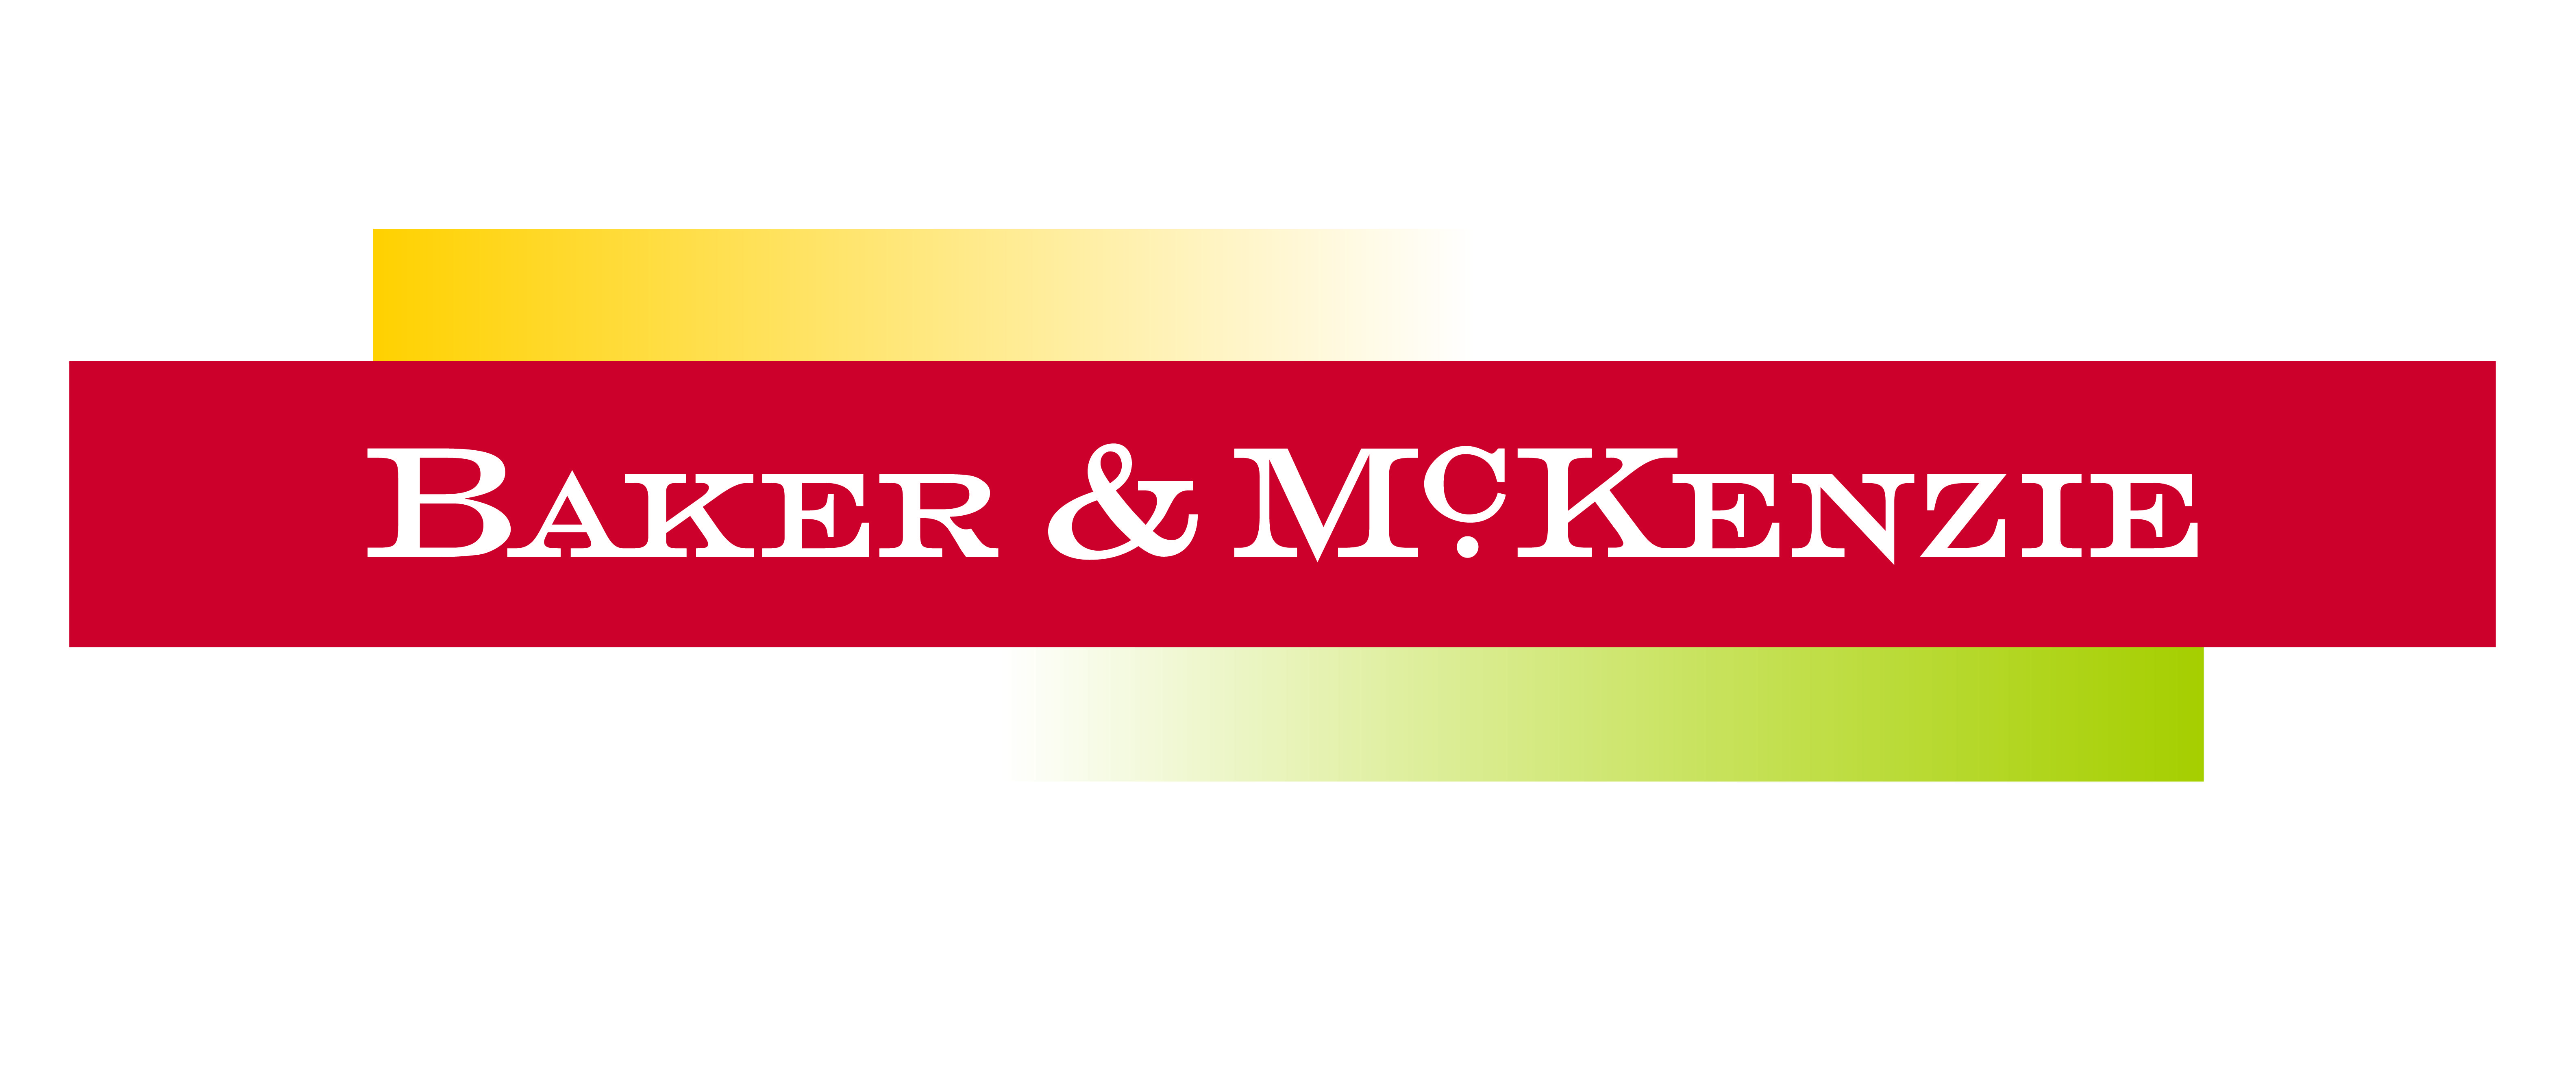 Baker McKenzie Logo - baker mckenzie logo – Youth Guidance